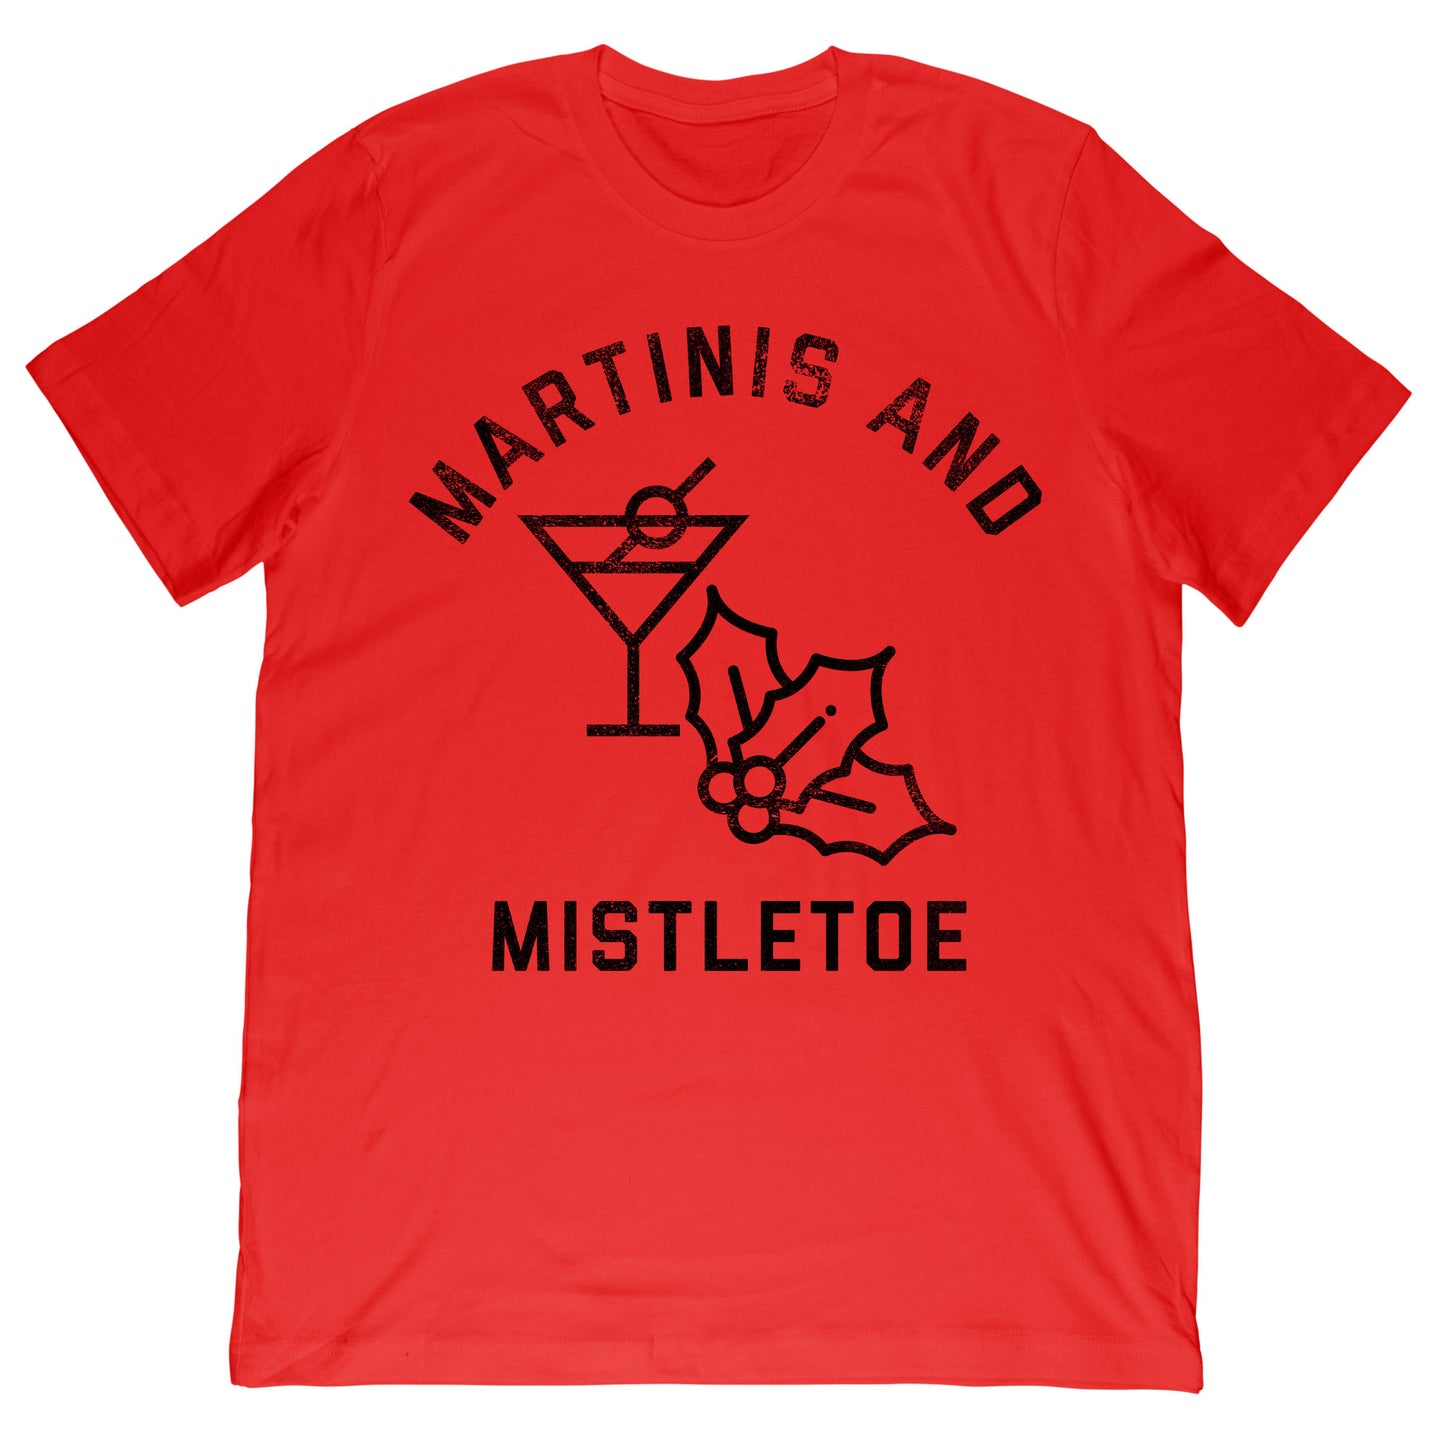 Martinis and Mistletoe T-Shirt